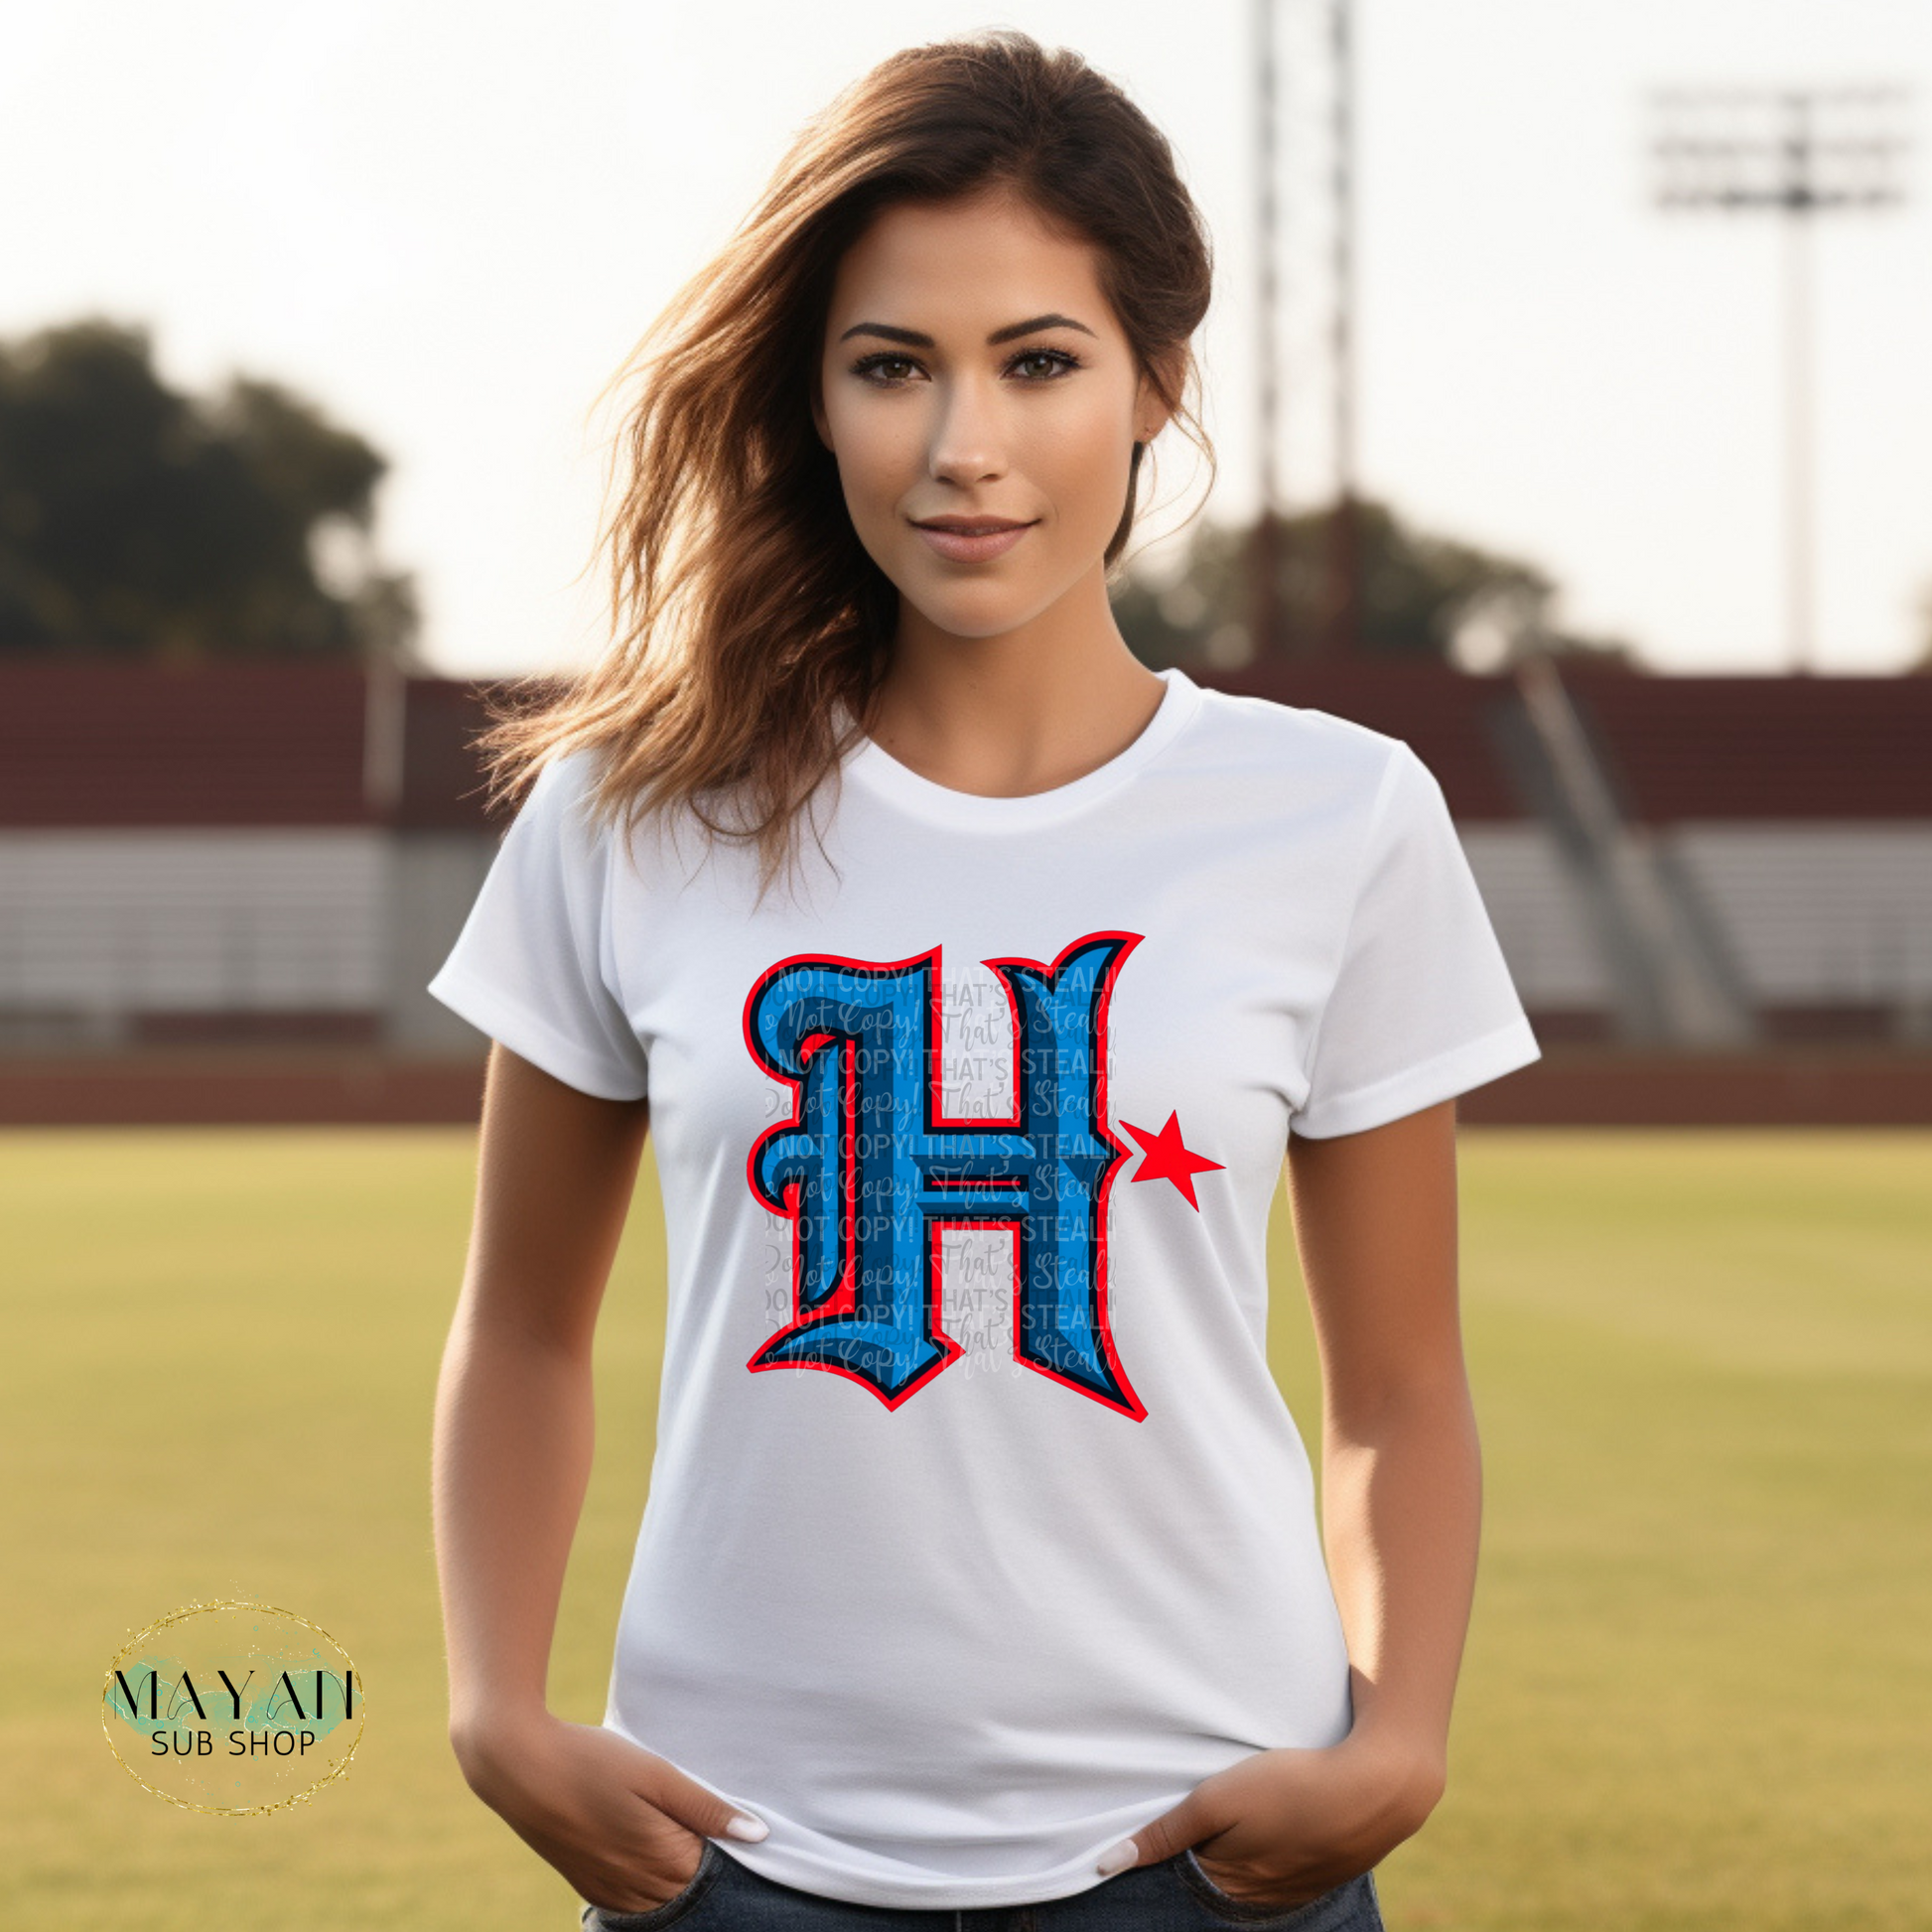 Big H shirt. -Mayan Sub Shop